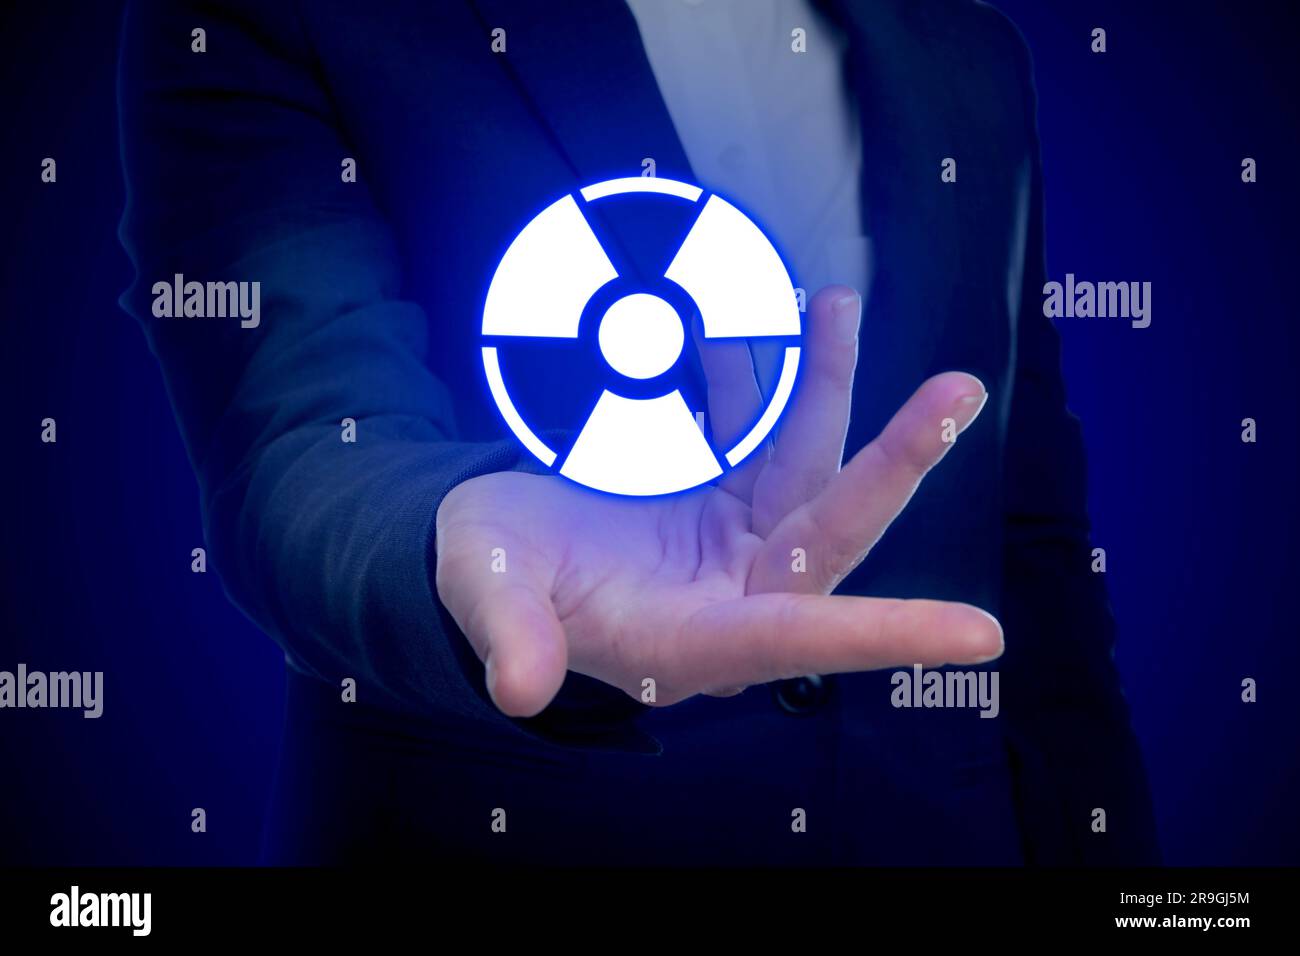 Woman holding glowing radiation warning symbol on dark blue background, closeup Stock Photo